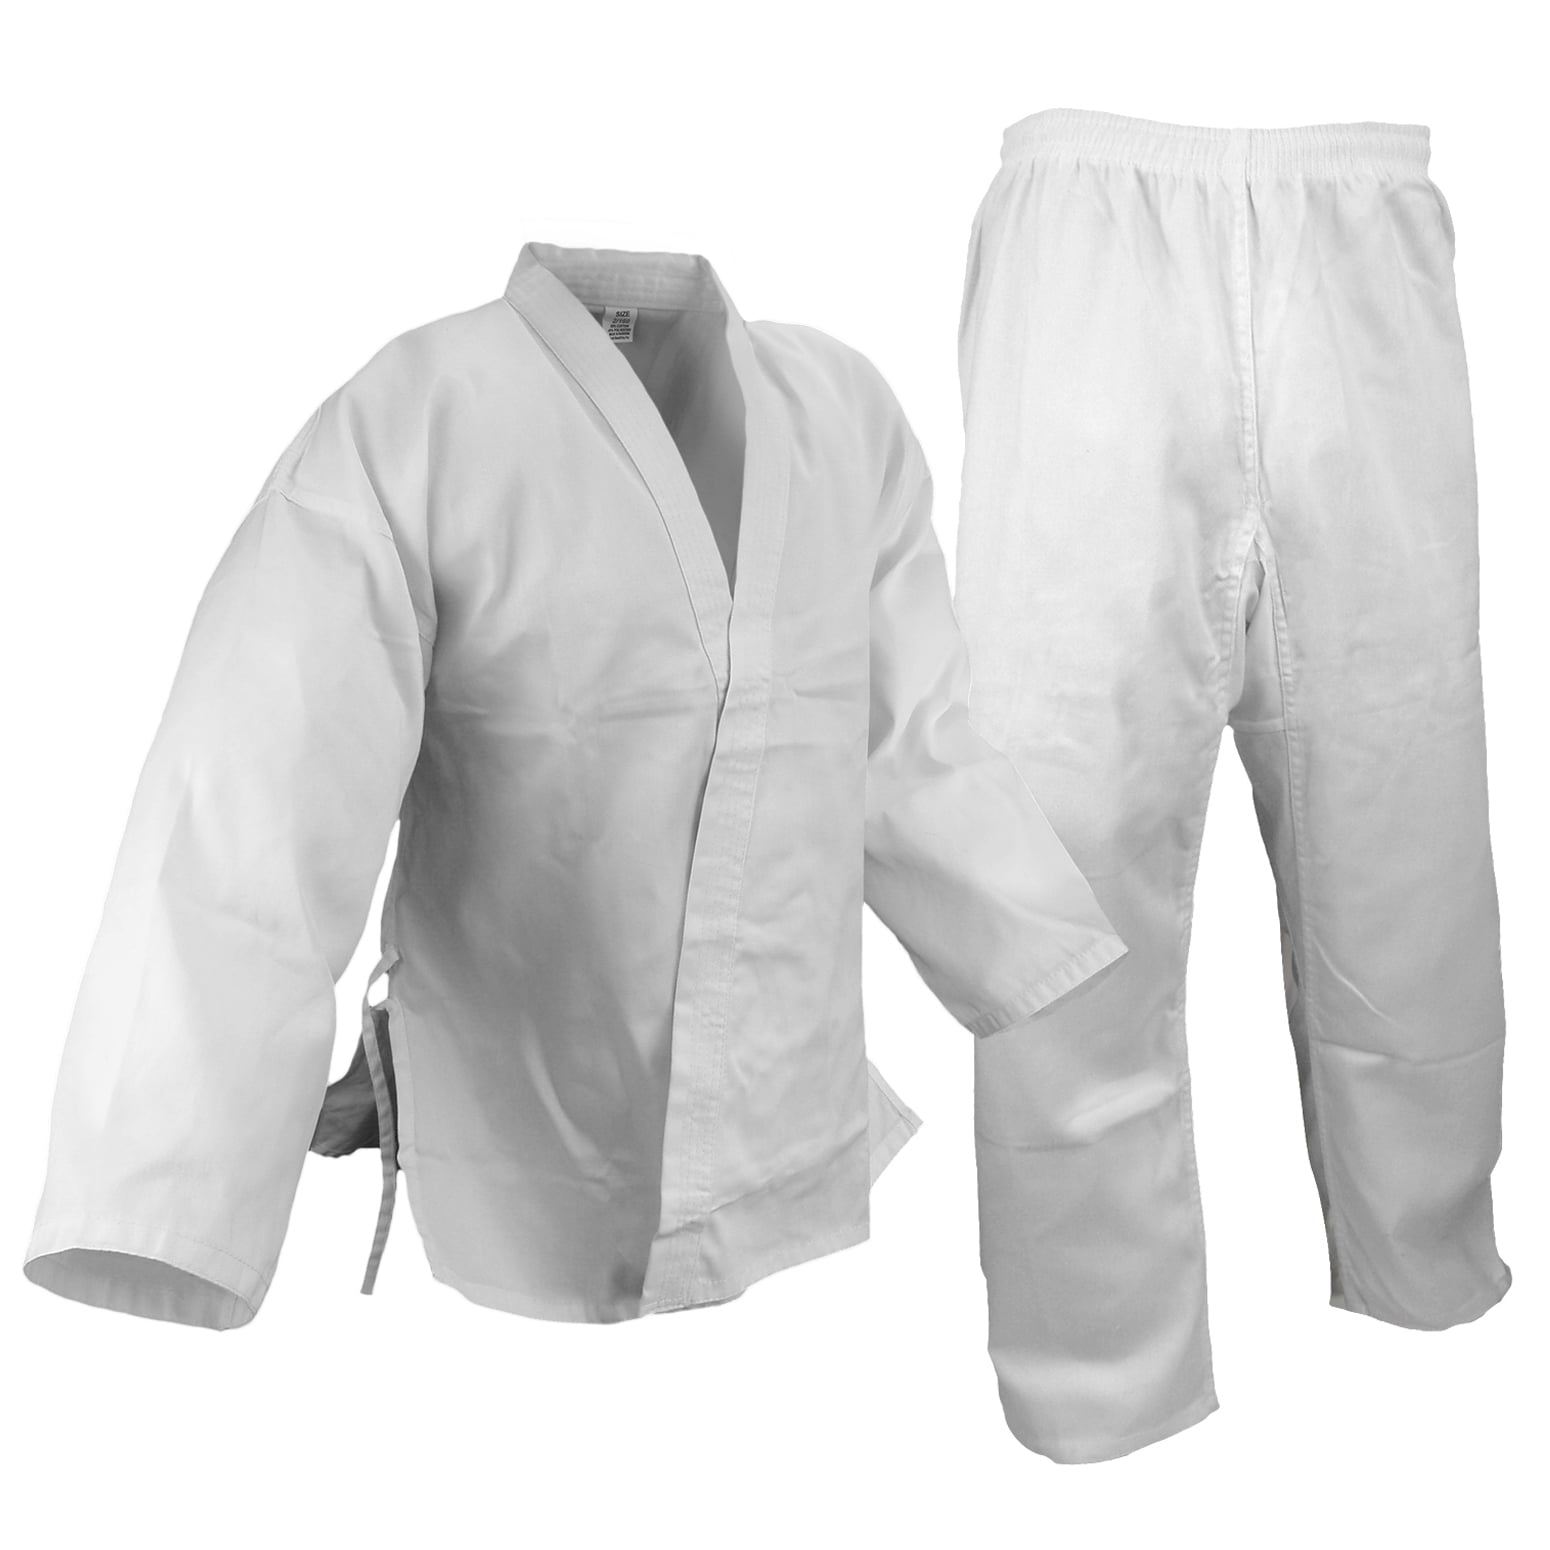 Karate/Taekwondo White/Black/Red Gi Cotton/Poly 8-OZ Adult/Kids with White Belt. 